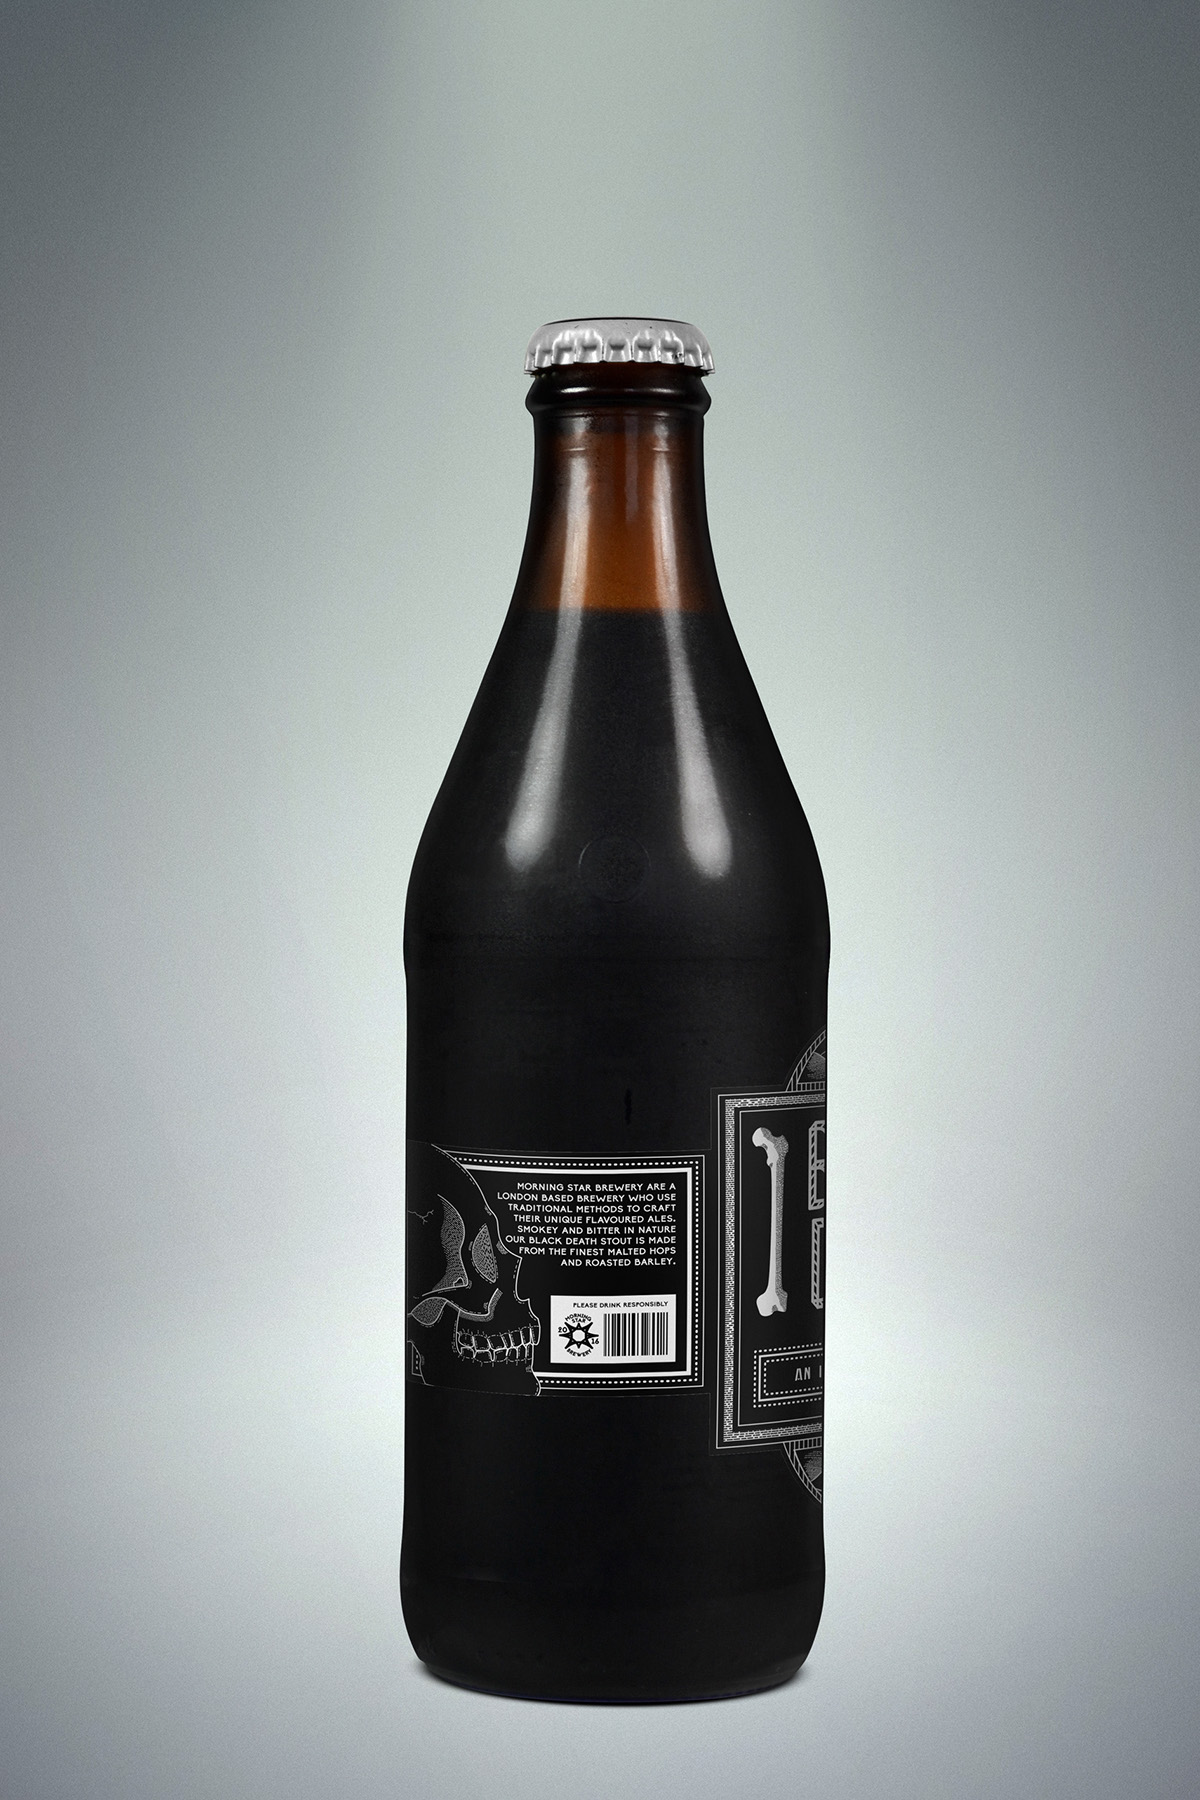 Adobe Portfolio beer bottle ale Label old fashioned traditional medieval monochrome